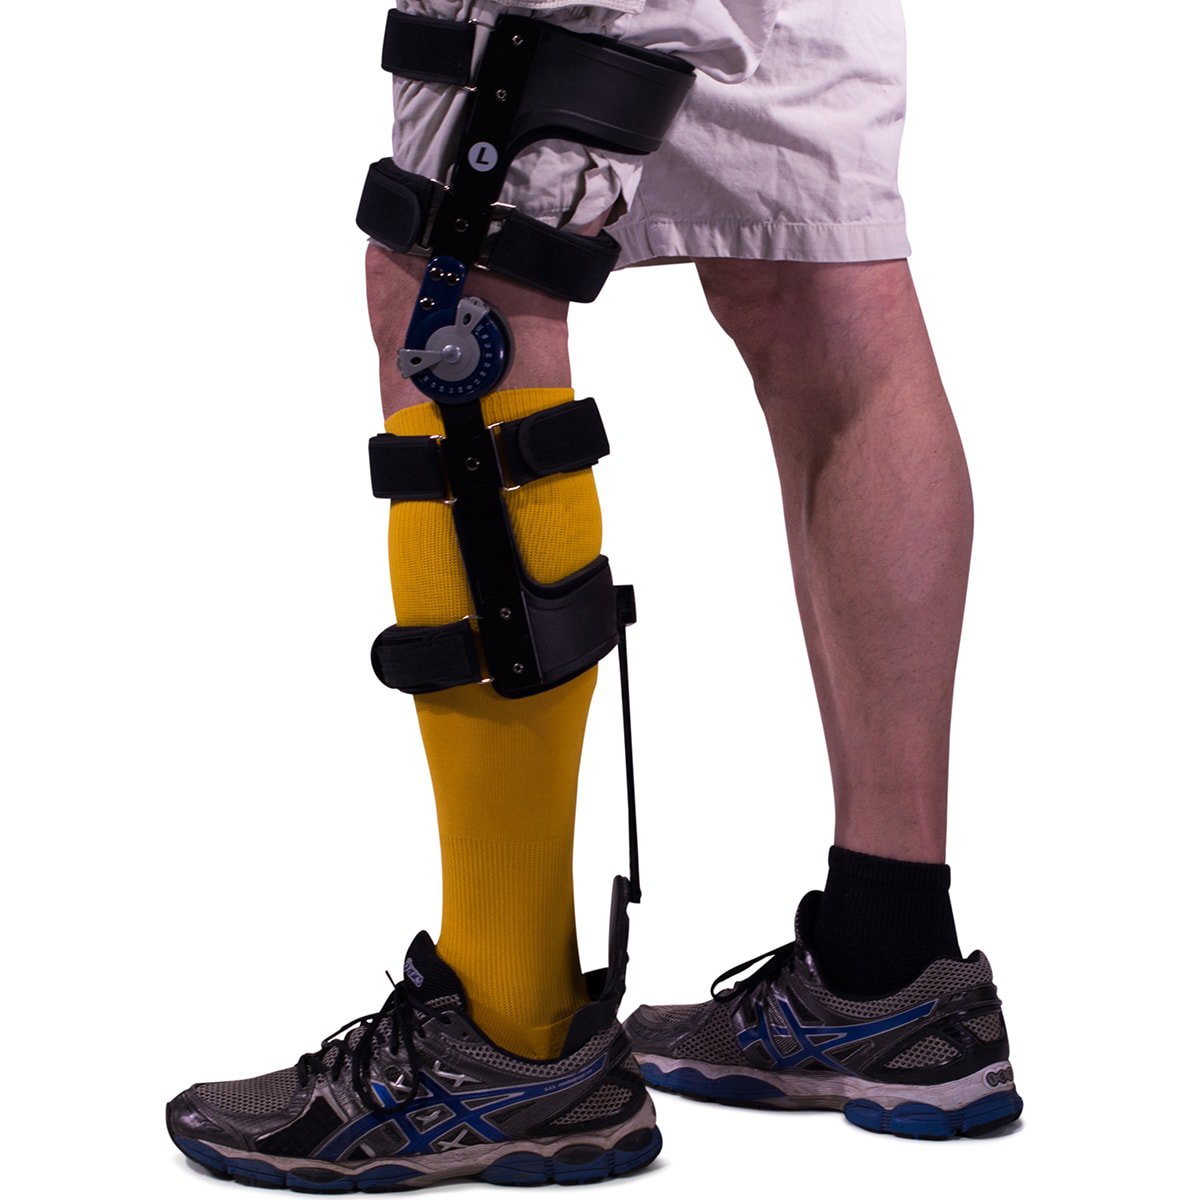 Masted Knee Brace worn by a man